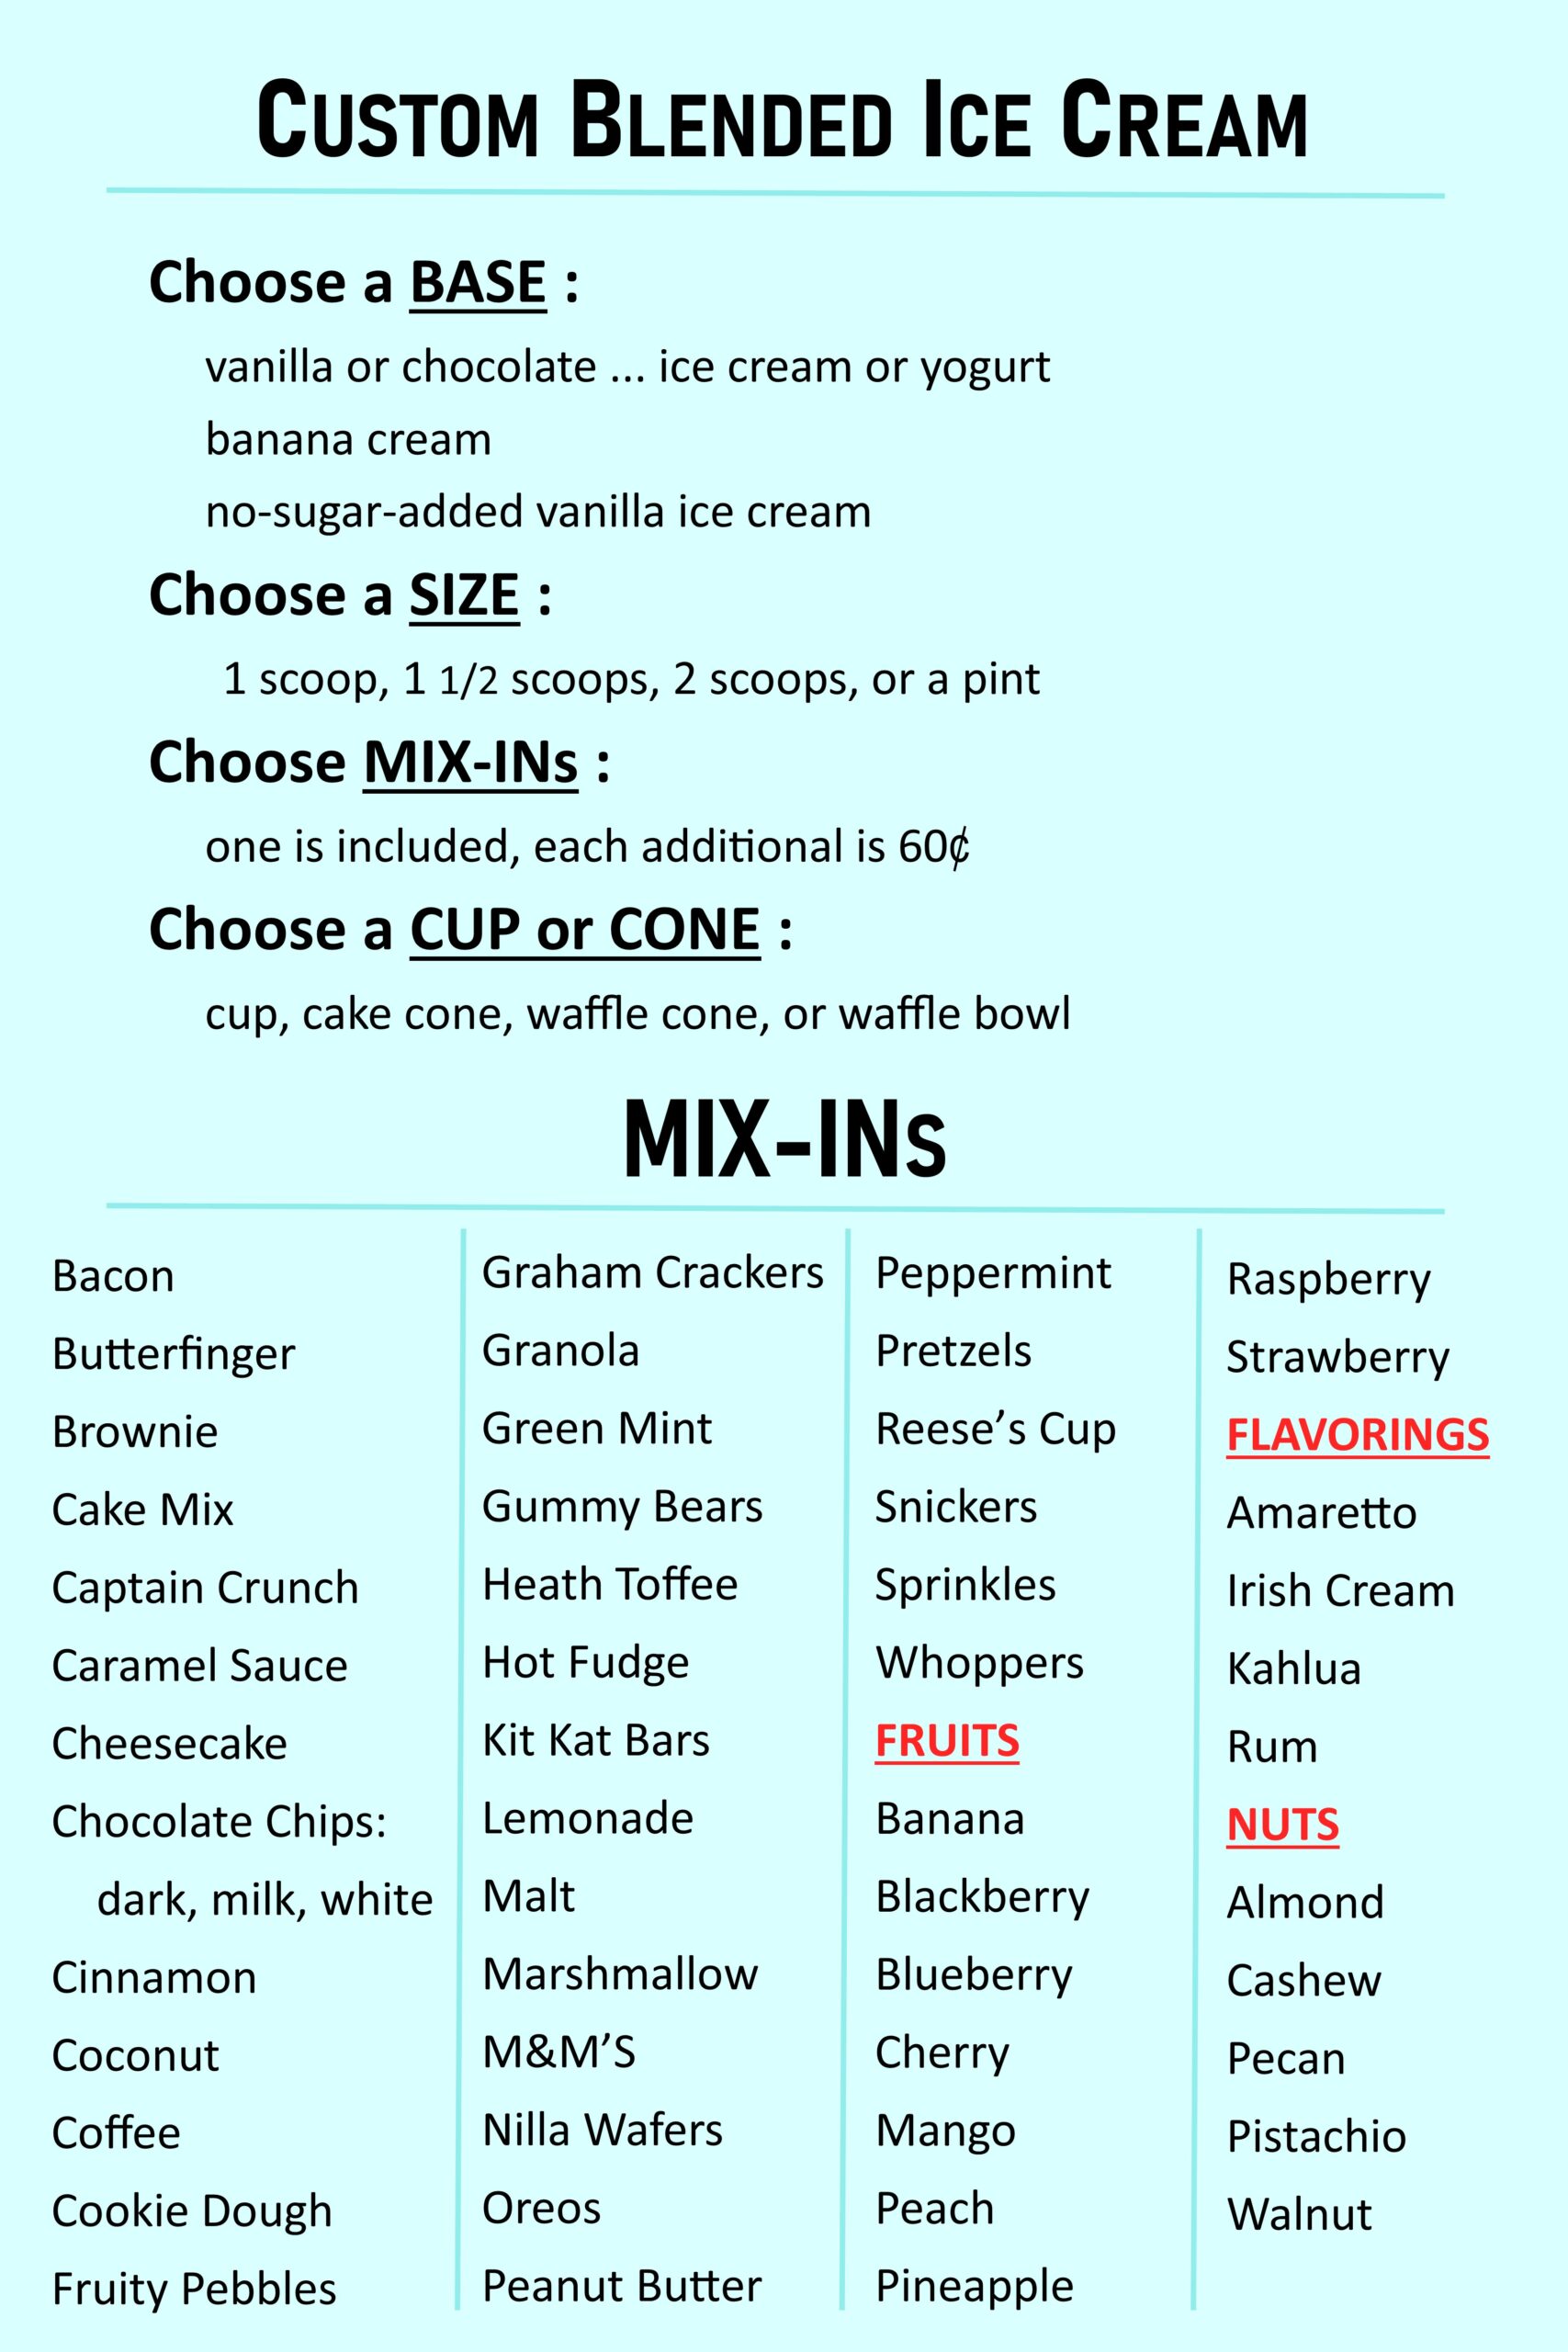 Andee's Menu - Ice Cream Ingredient List